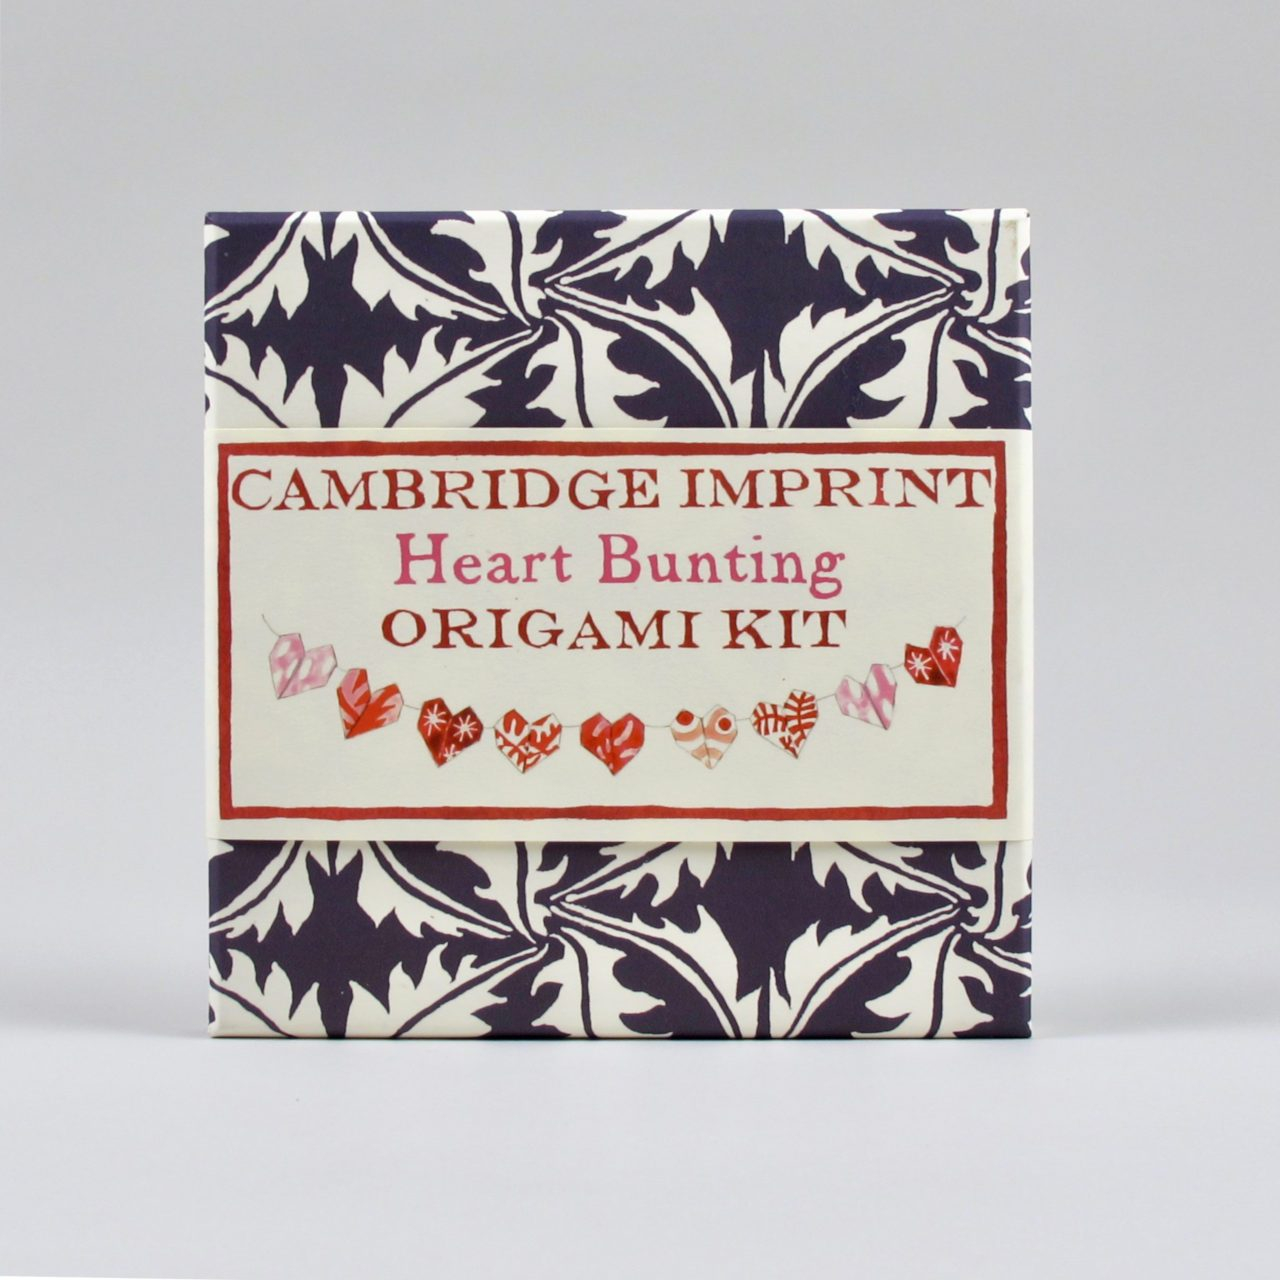 Origami Heart Garland Garland Of Hearts Origami Kit Cambridge Imprint